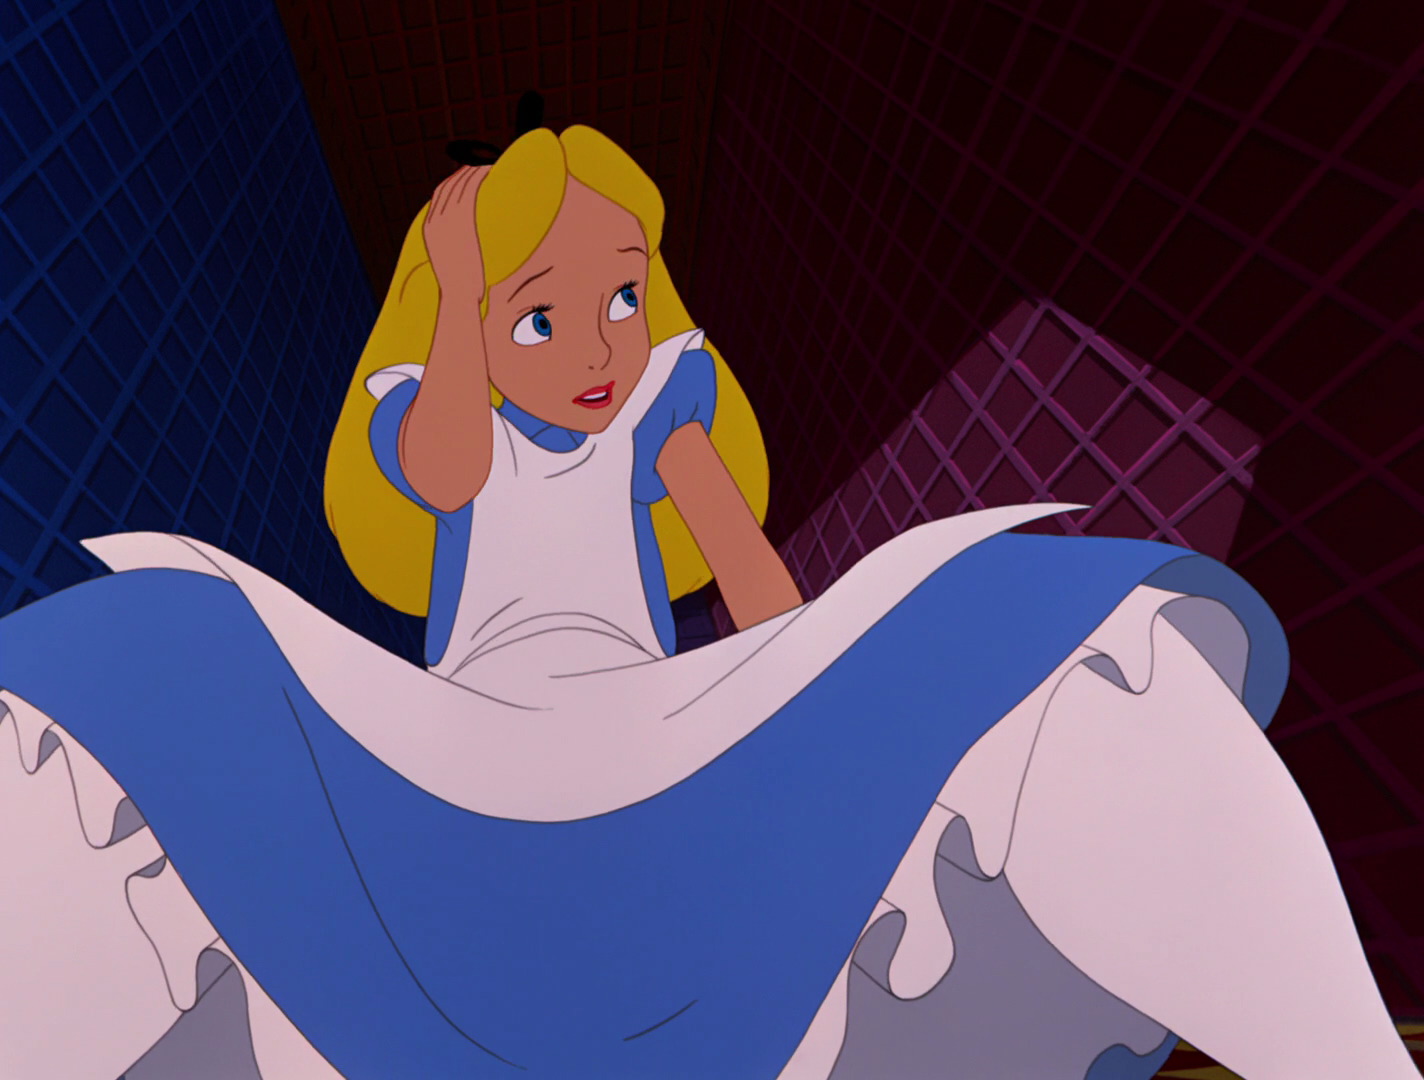 Alice in Wonderland download the new